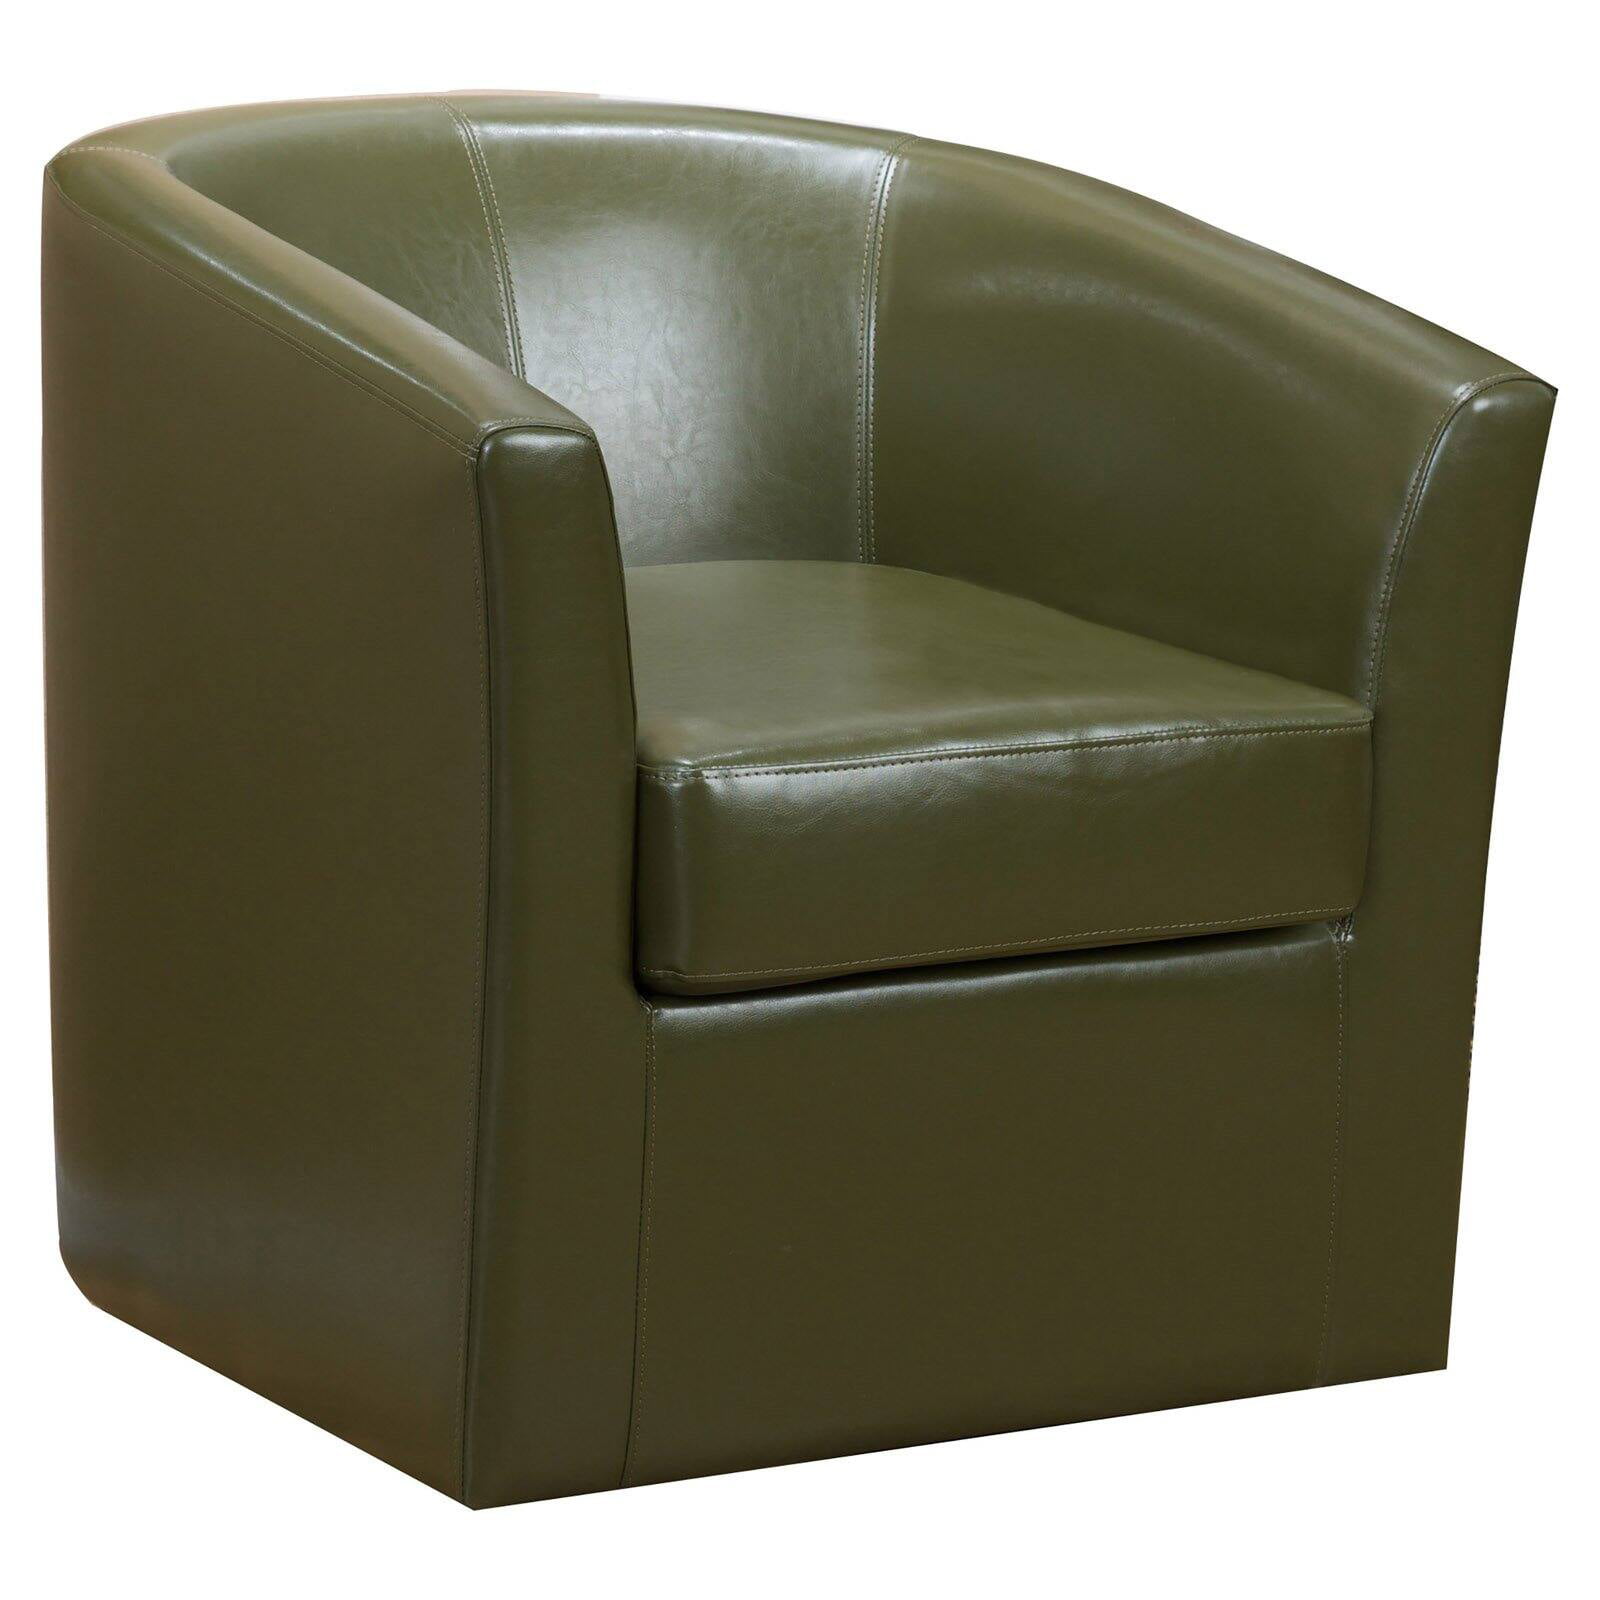 Swivel Barrel Chair Com, Leather Swivel Barrel Chairs